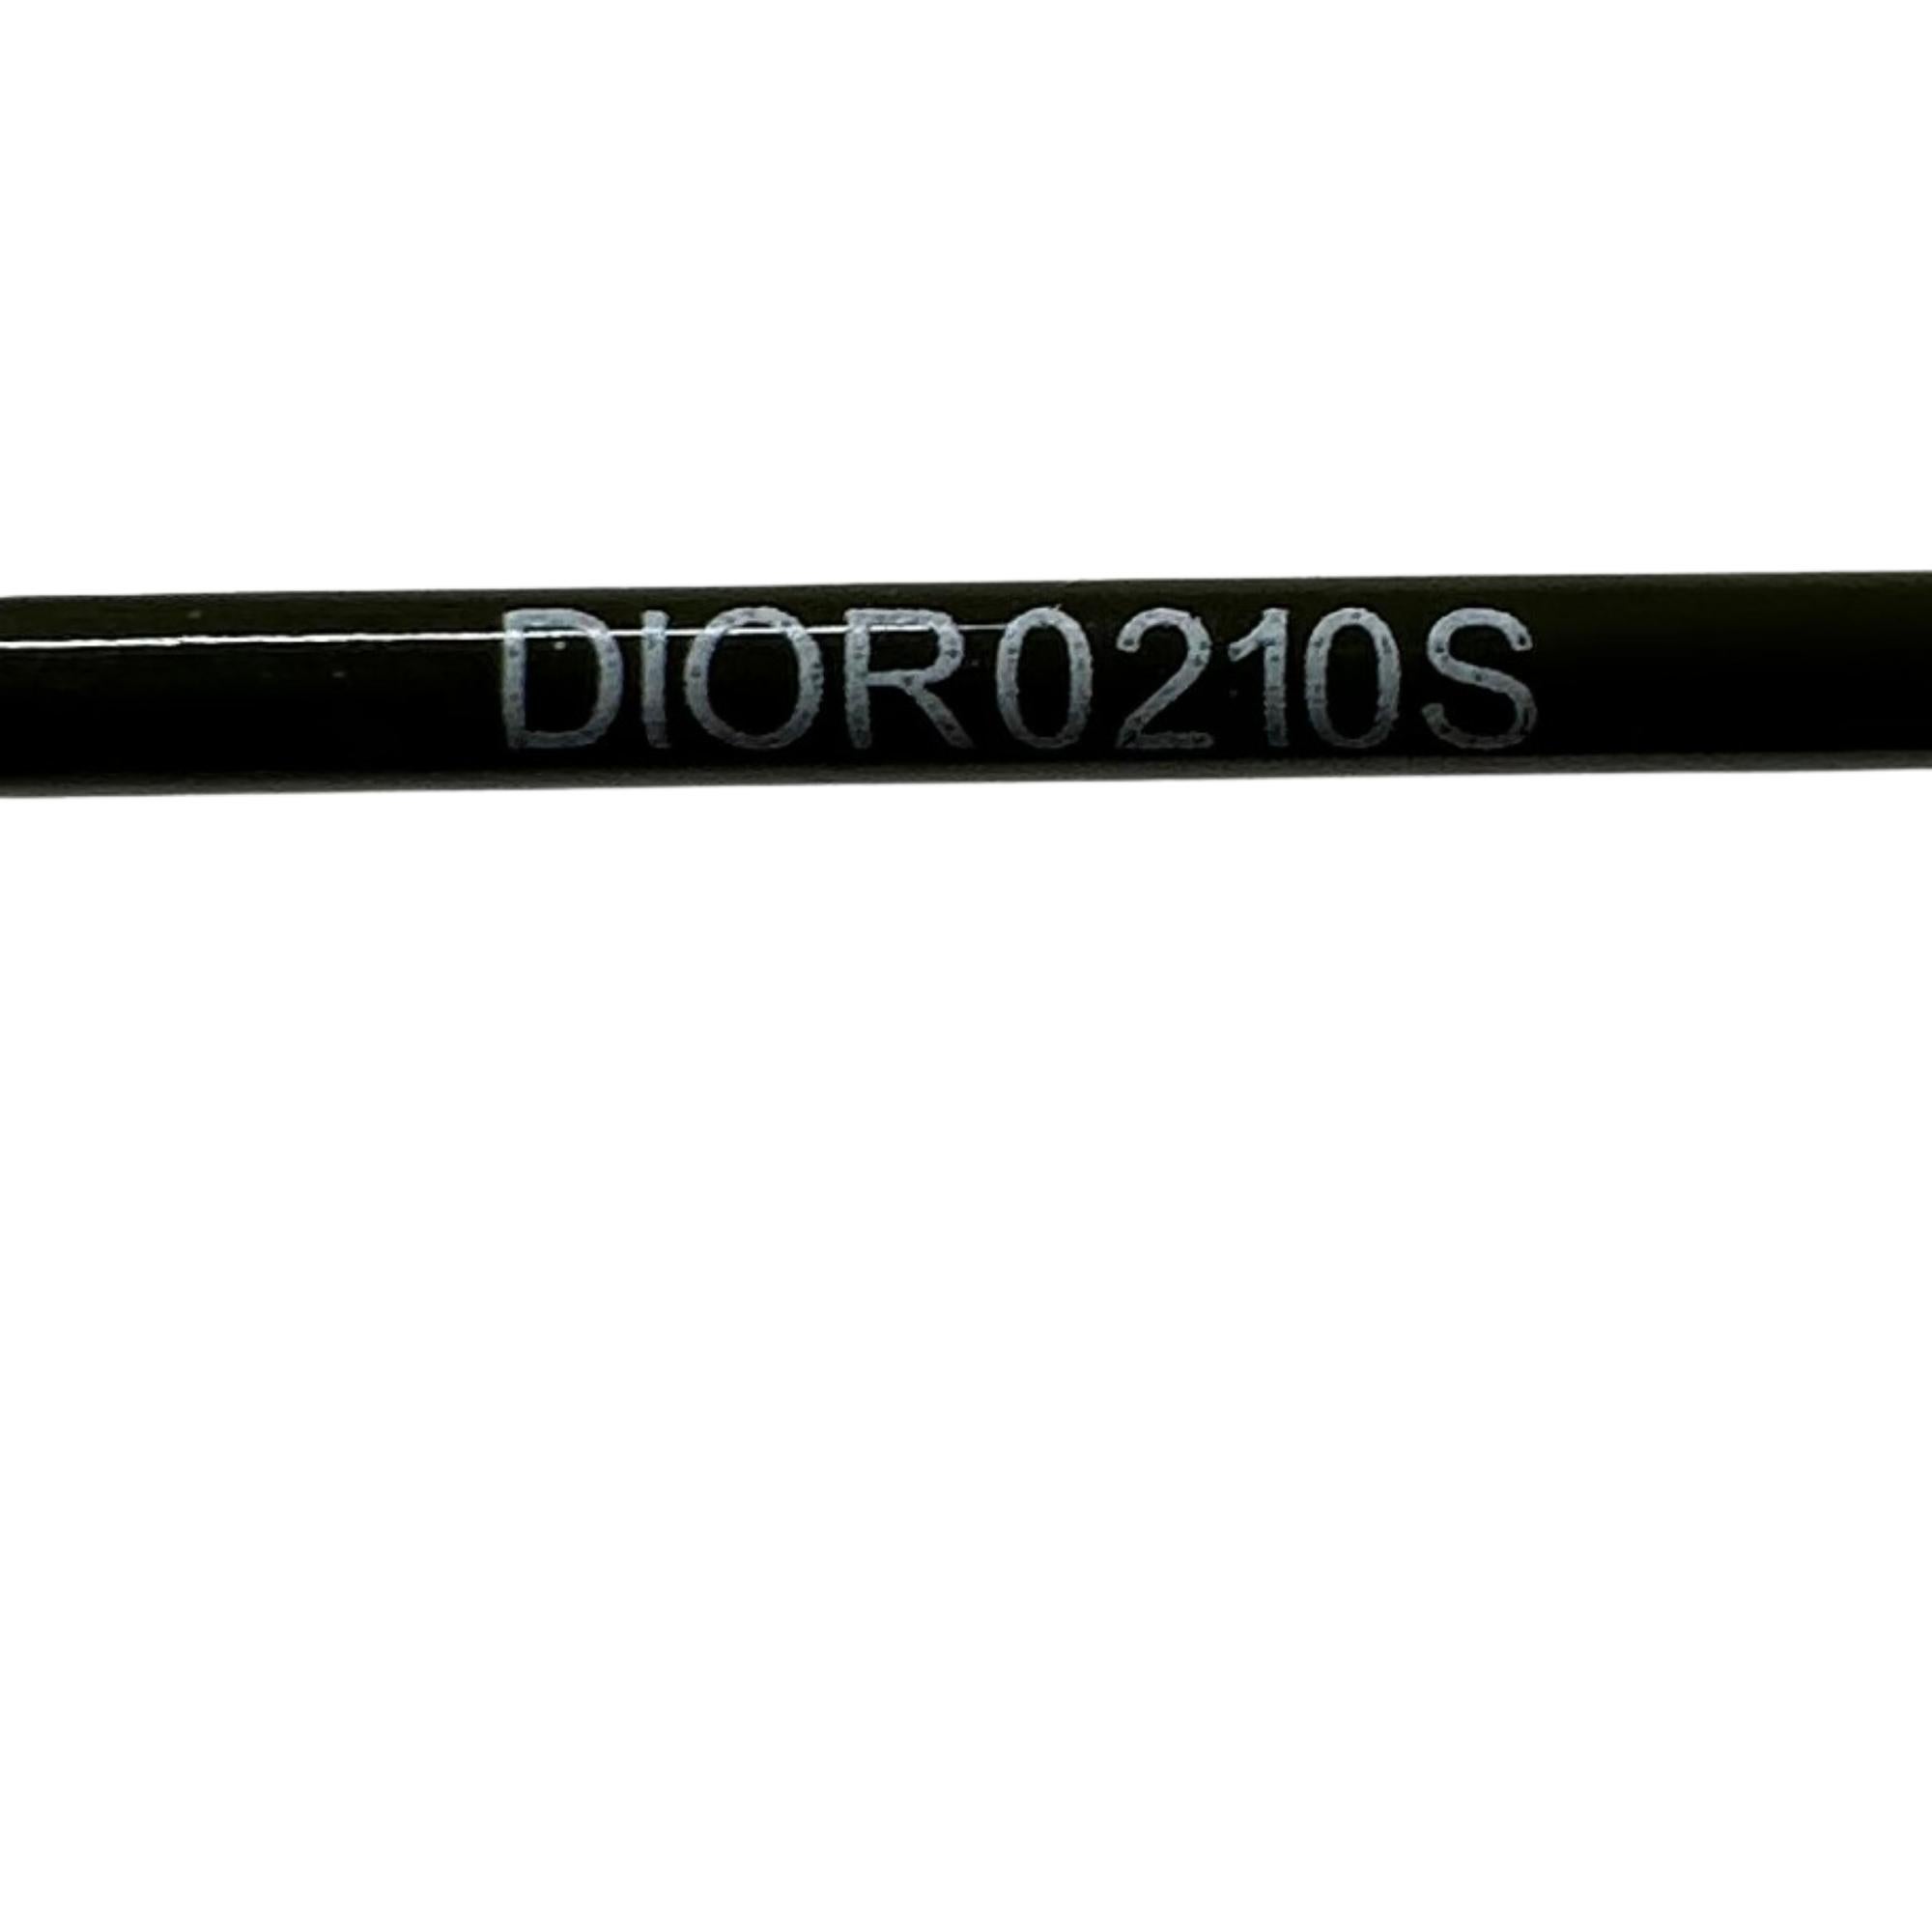 Dior Homme Dior0210s Palladium Sunglasses For Sale 4